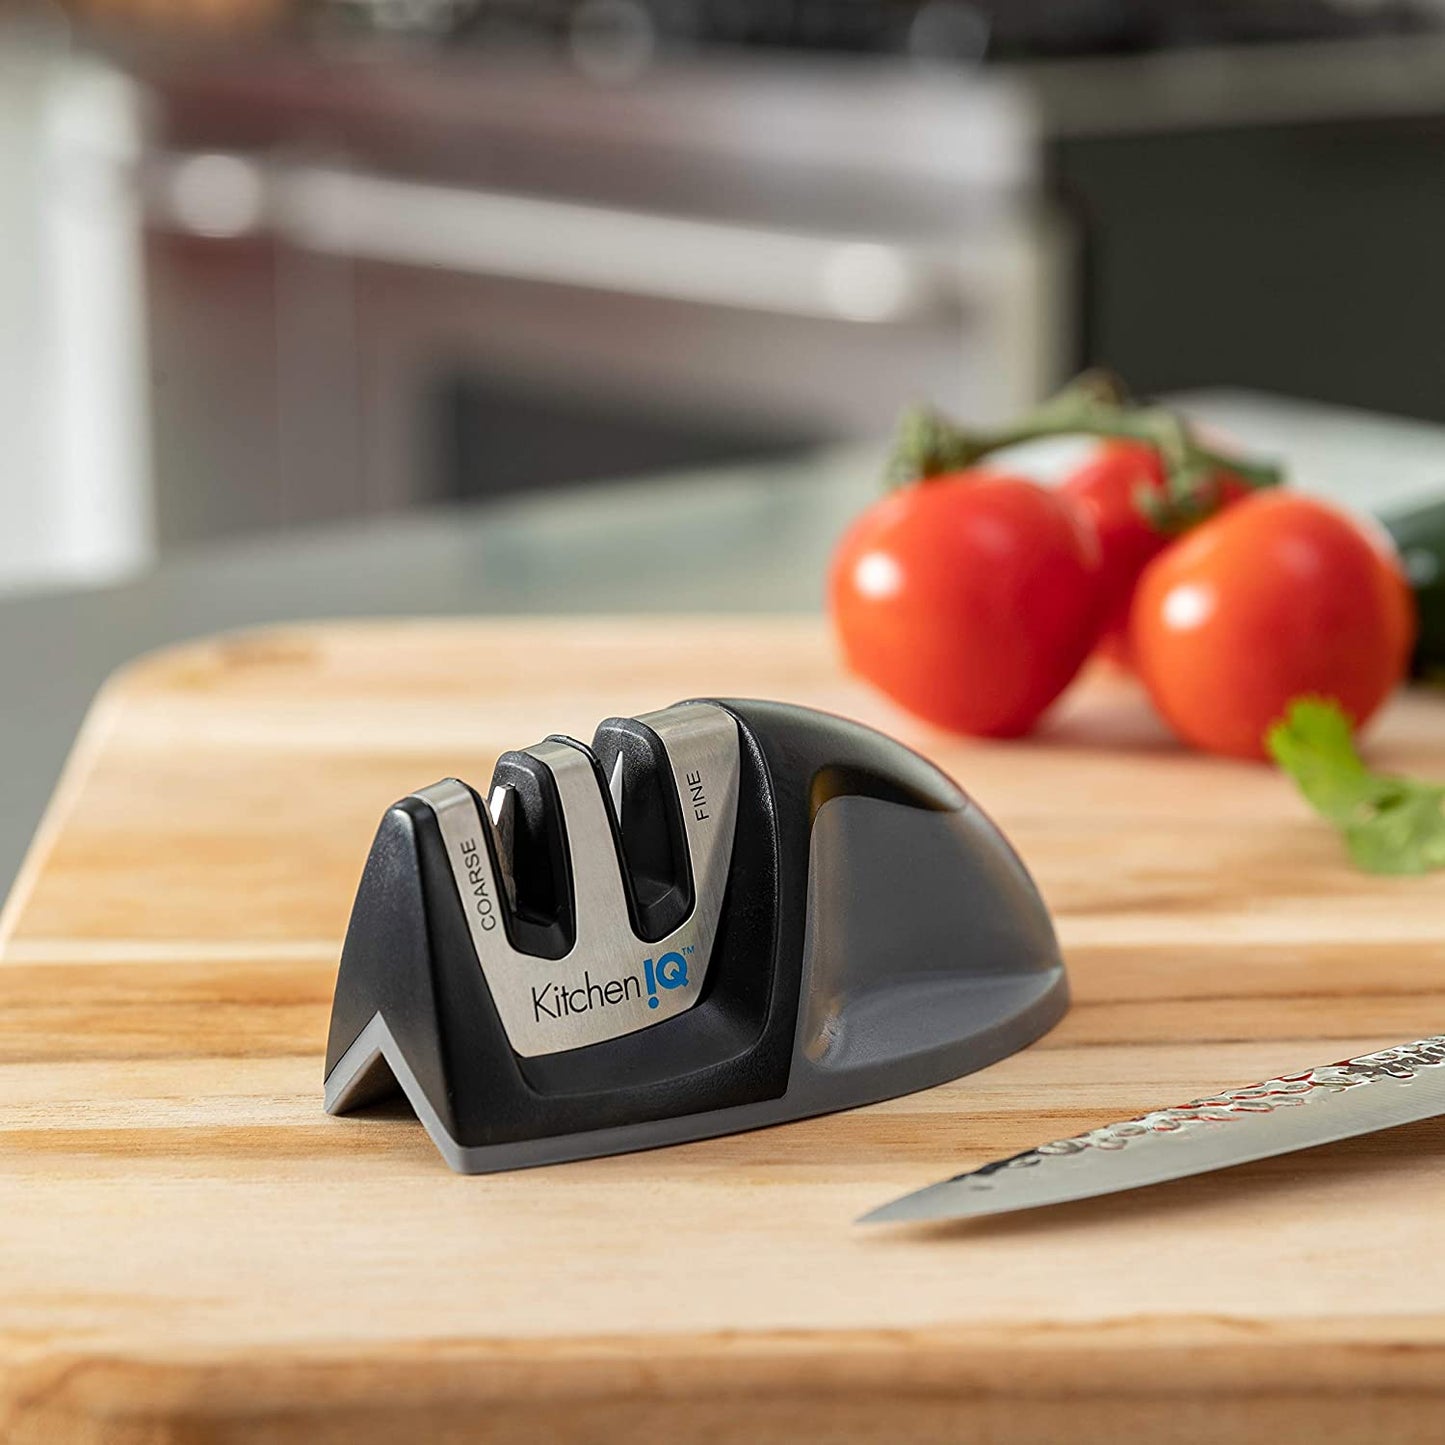 Smith's Housewares Edge Grip 2-Step Mini Knife Sharpener